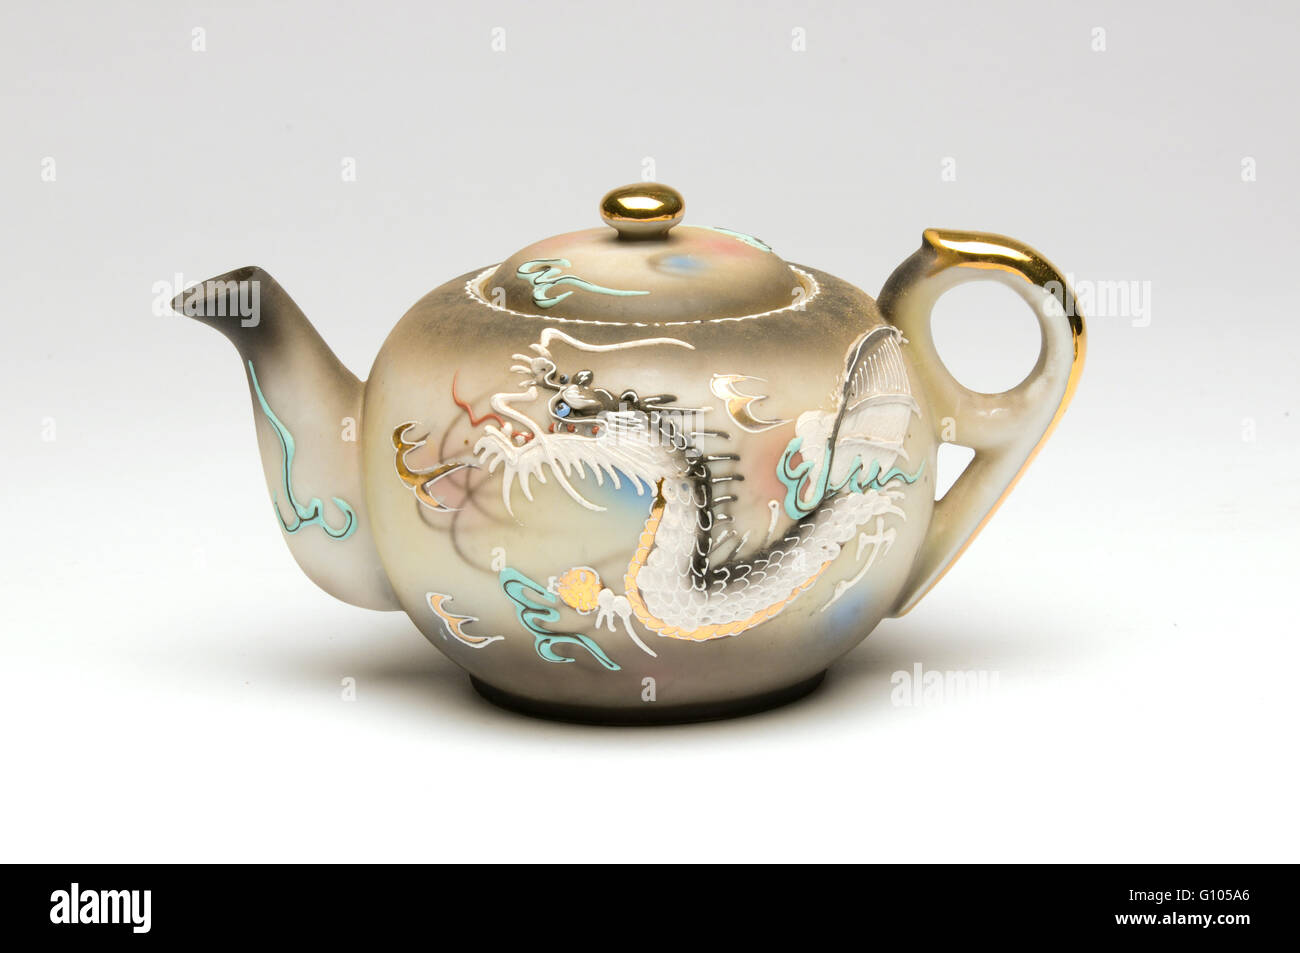 Juego de té de porcelana cerámica japonesa Foto de stock